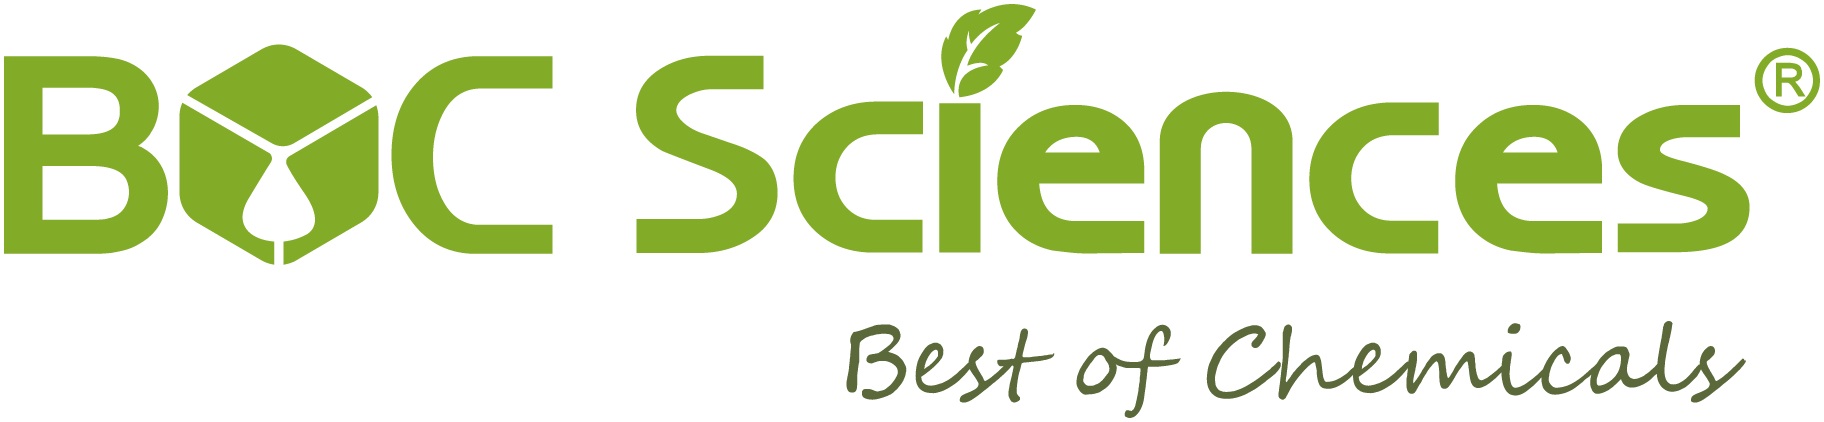 Large logo of Boc Sciences